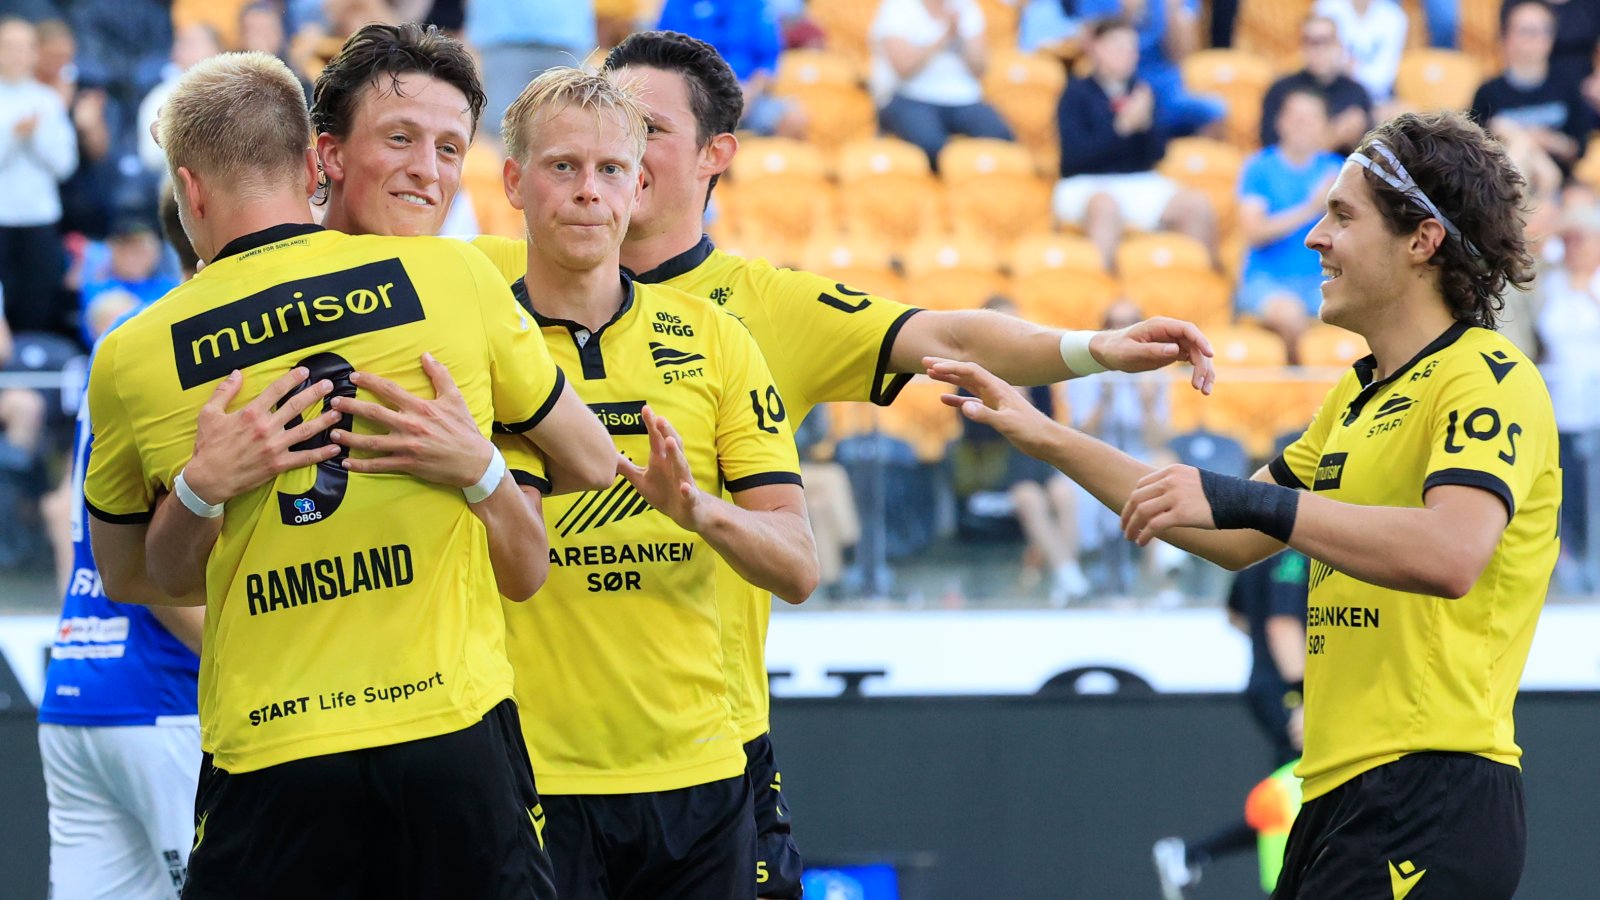 Martin Ramsland, Sander Sjøkvist, Eirik Schulze, Eman Markovic feirer scoring mot Stjørdals-Blink. Foto: Tor Erik Schrøder / NTB